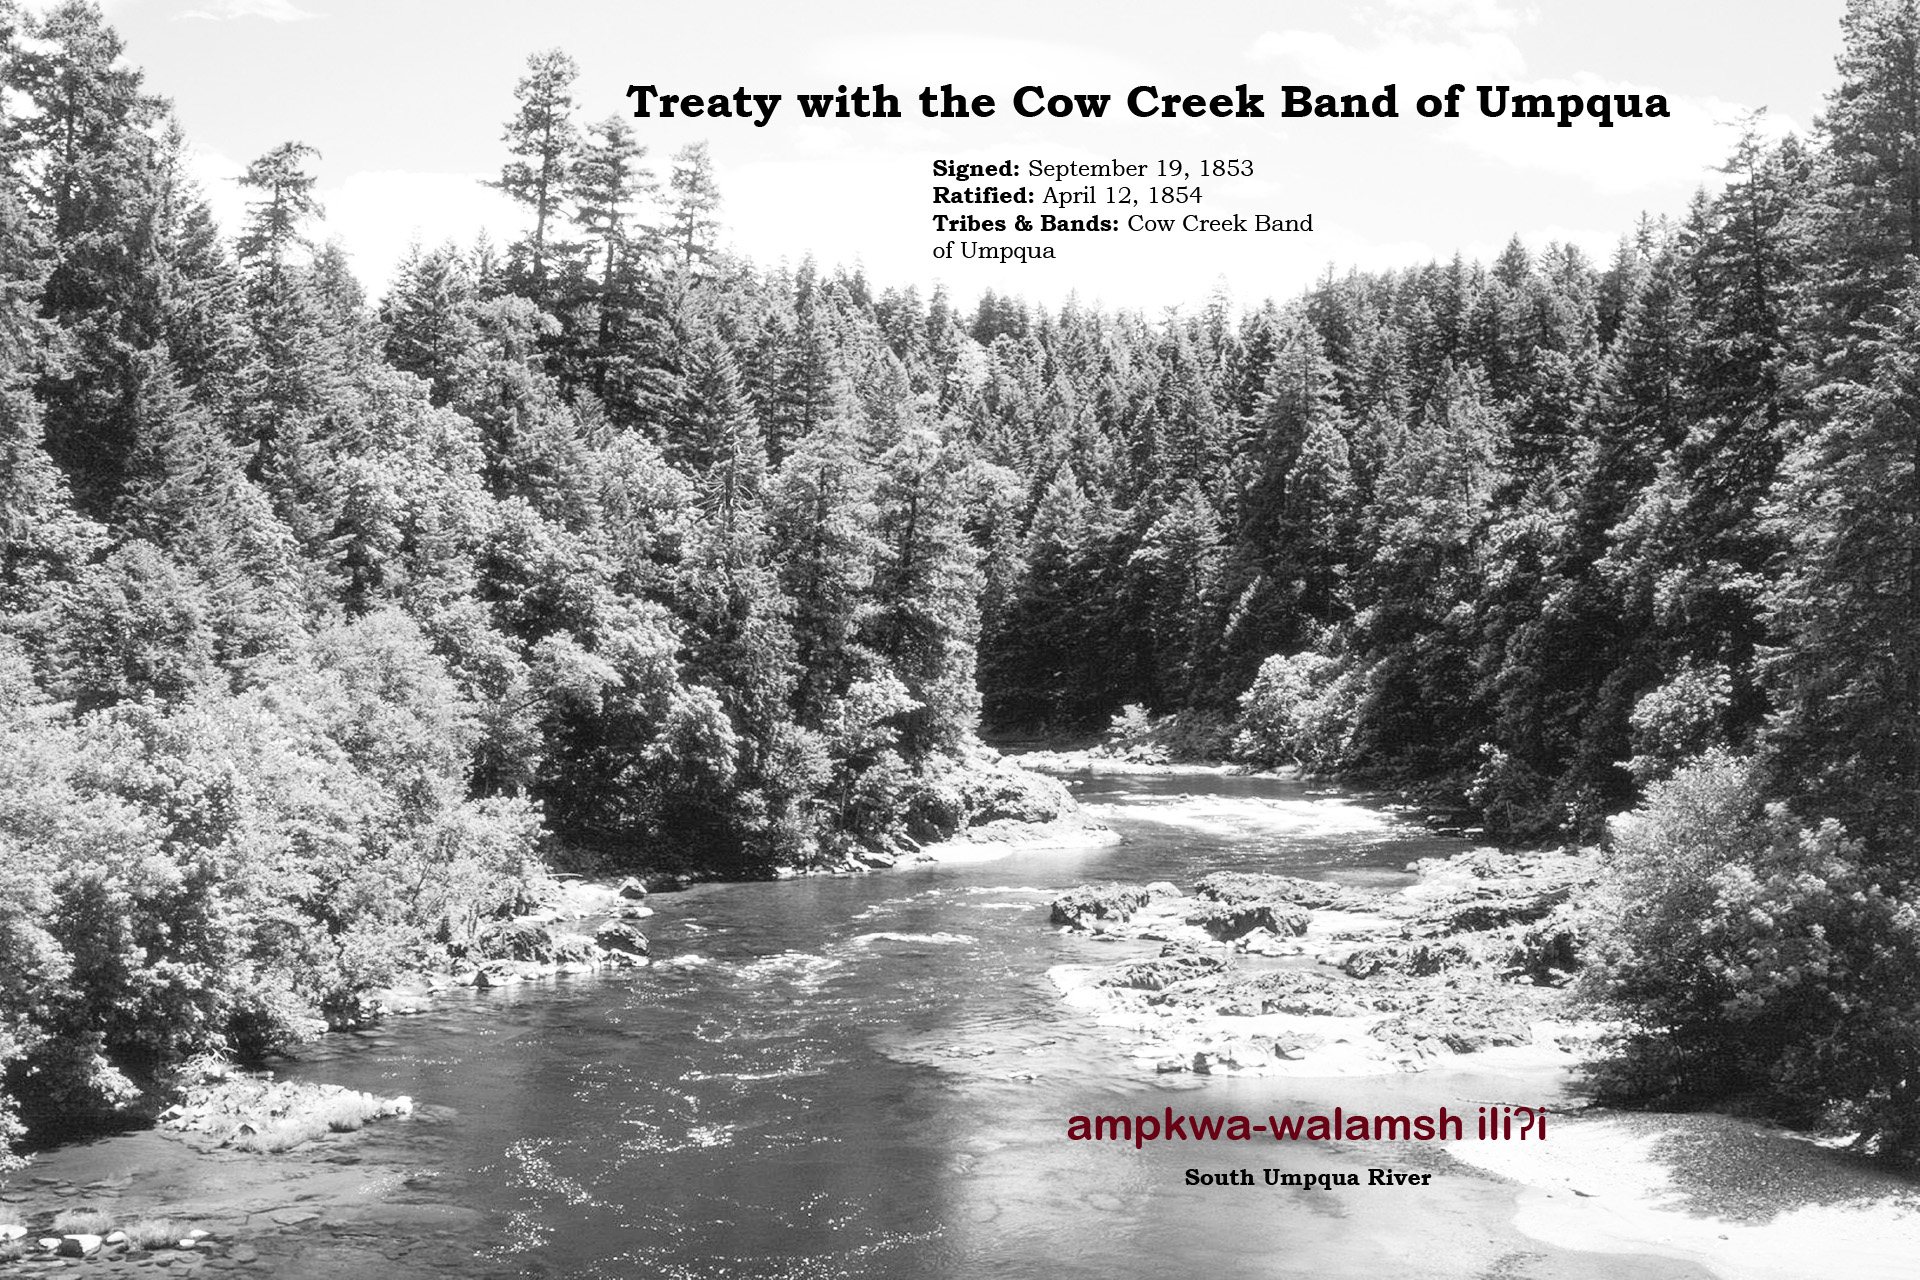 Umpqua Cow Creek Treaty 1853